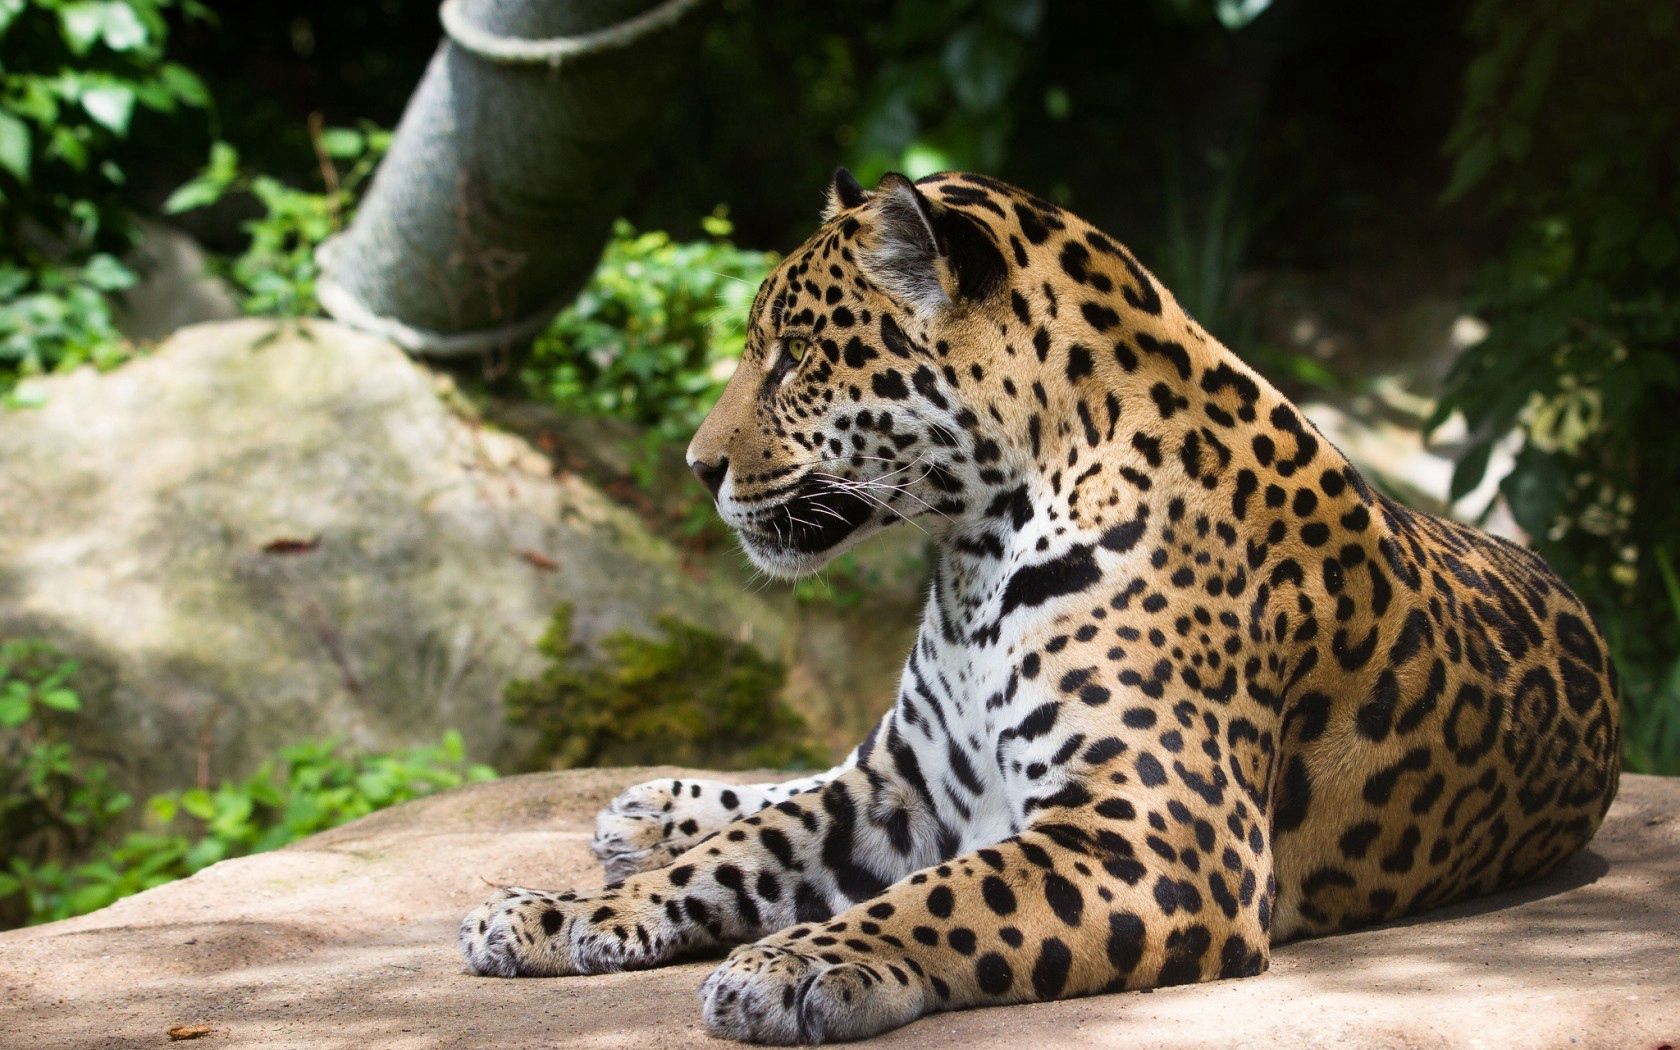 131200 Screensavers and Wallpapers Wild Cat for phone. Download animals, jaguar, predator, wild cat, wildcat pictures for free